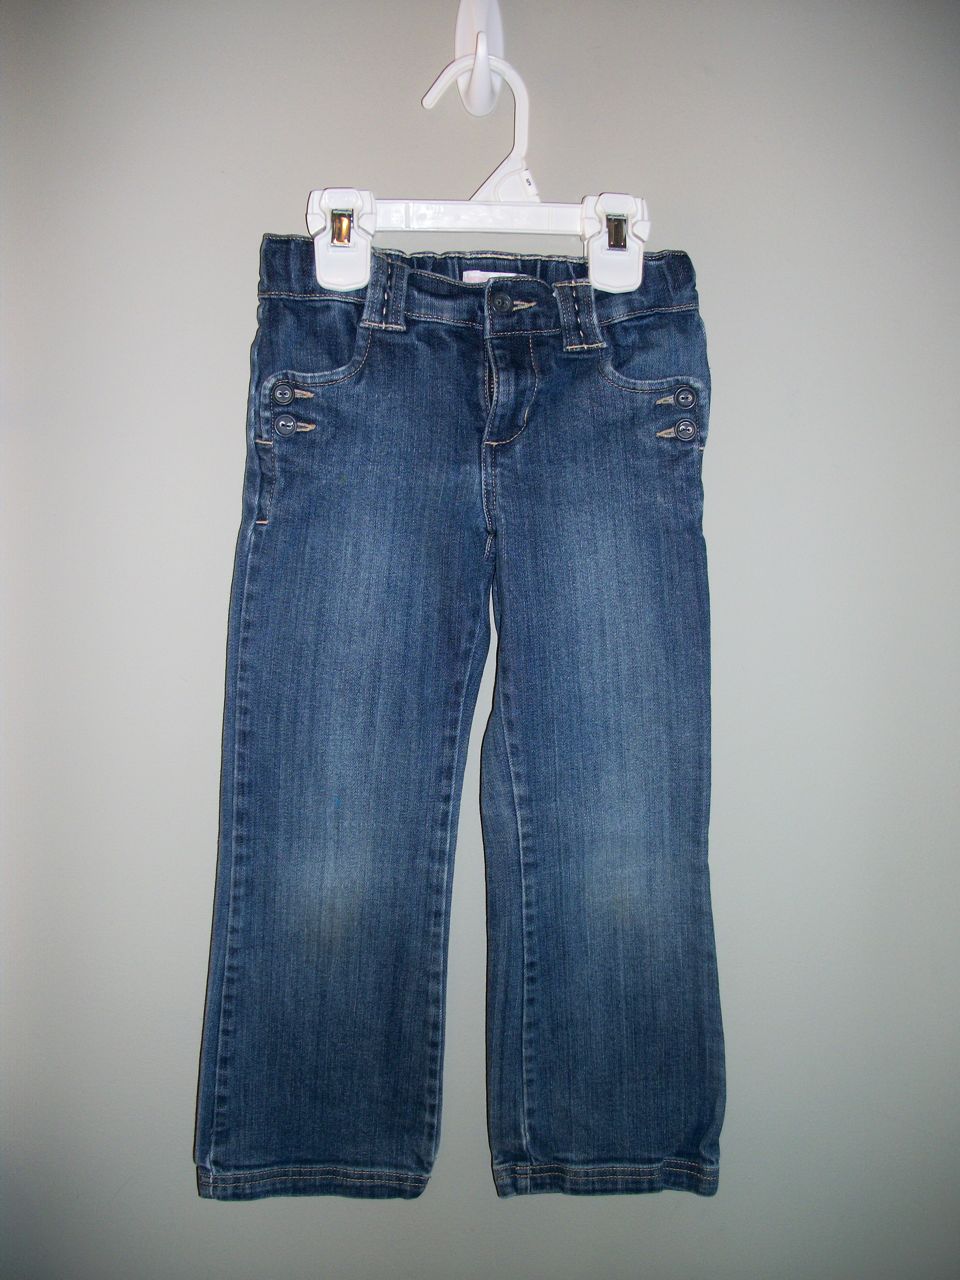 Virtual Yard Sale: GIRLS Sizes 4-6 Blue Jeans